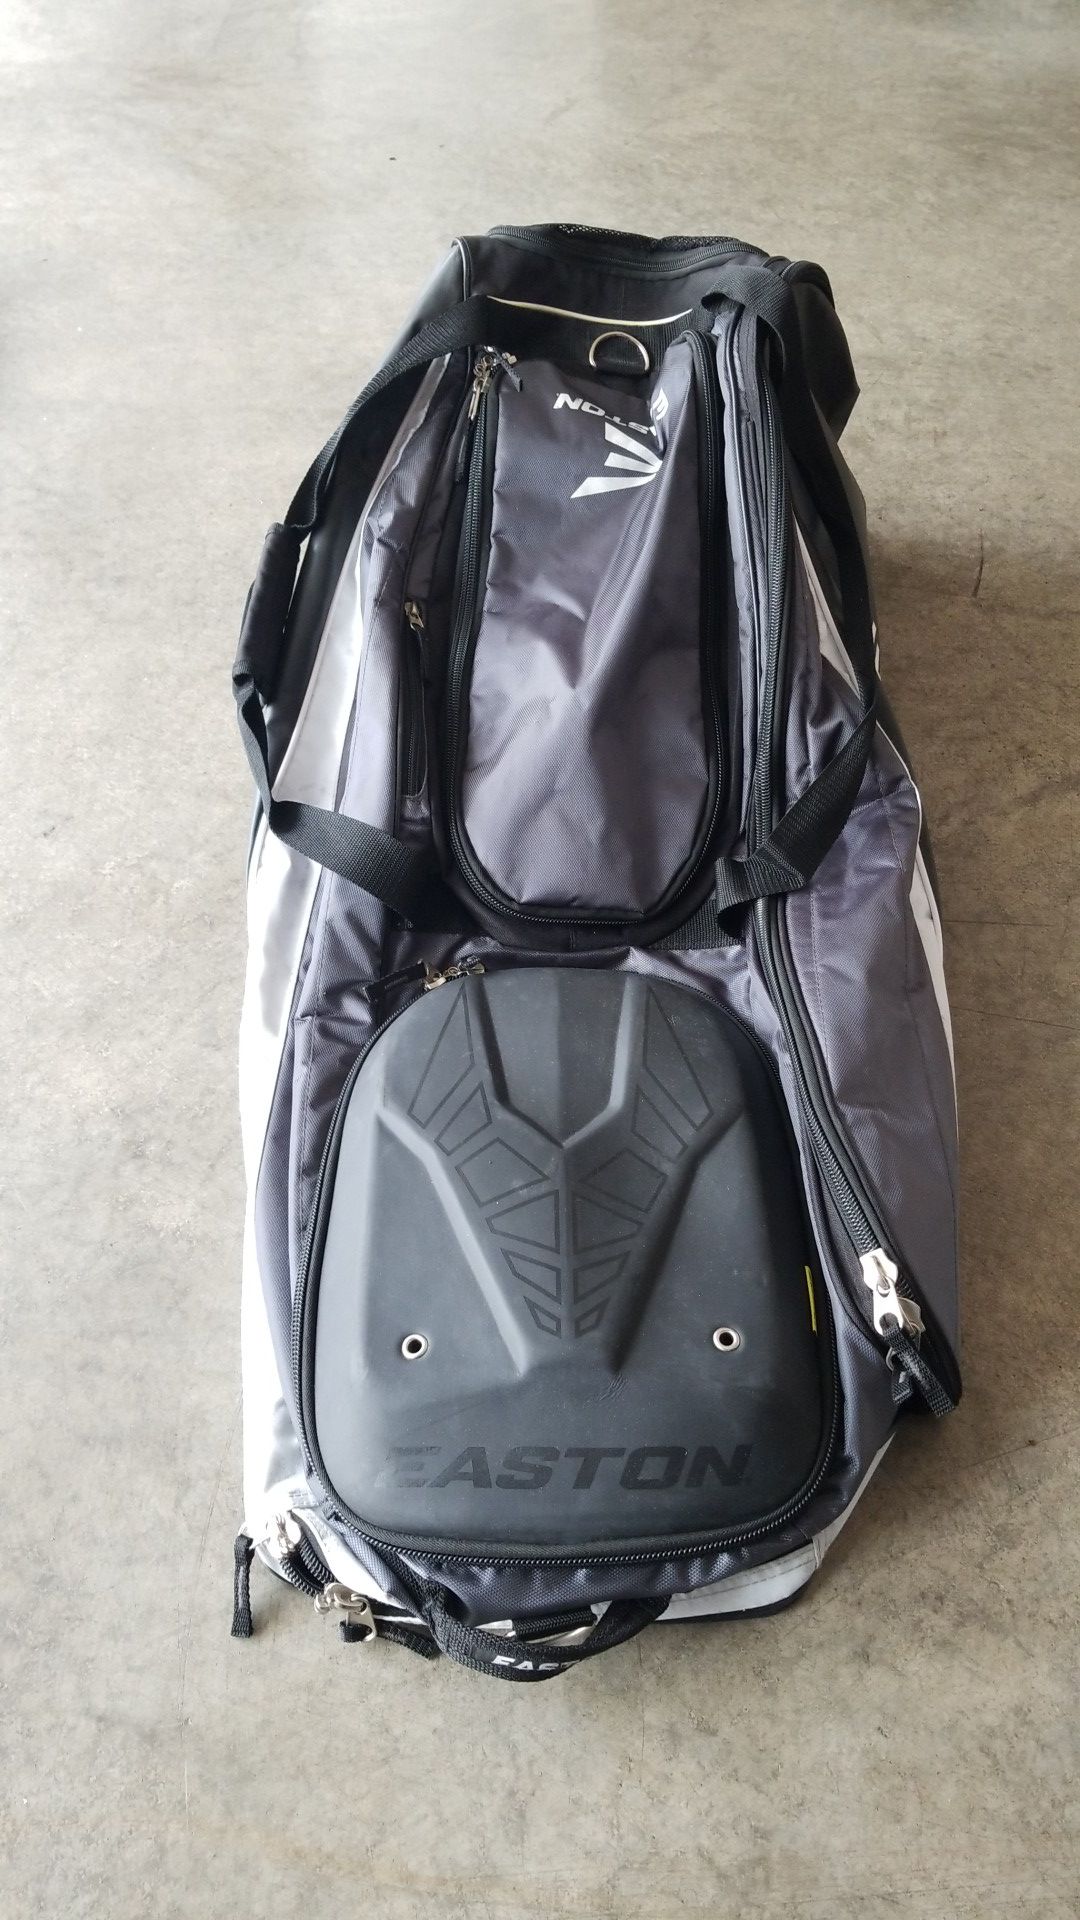 Easton Large rolling bat bag